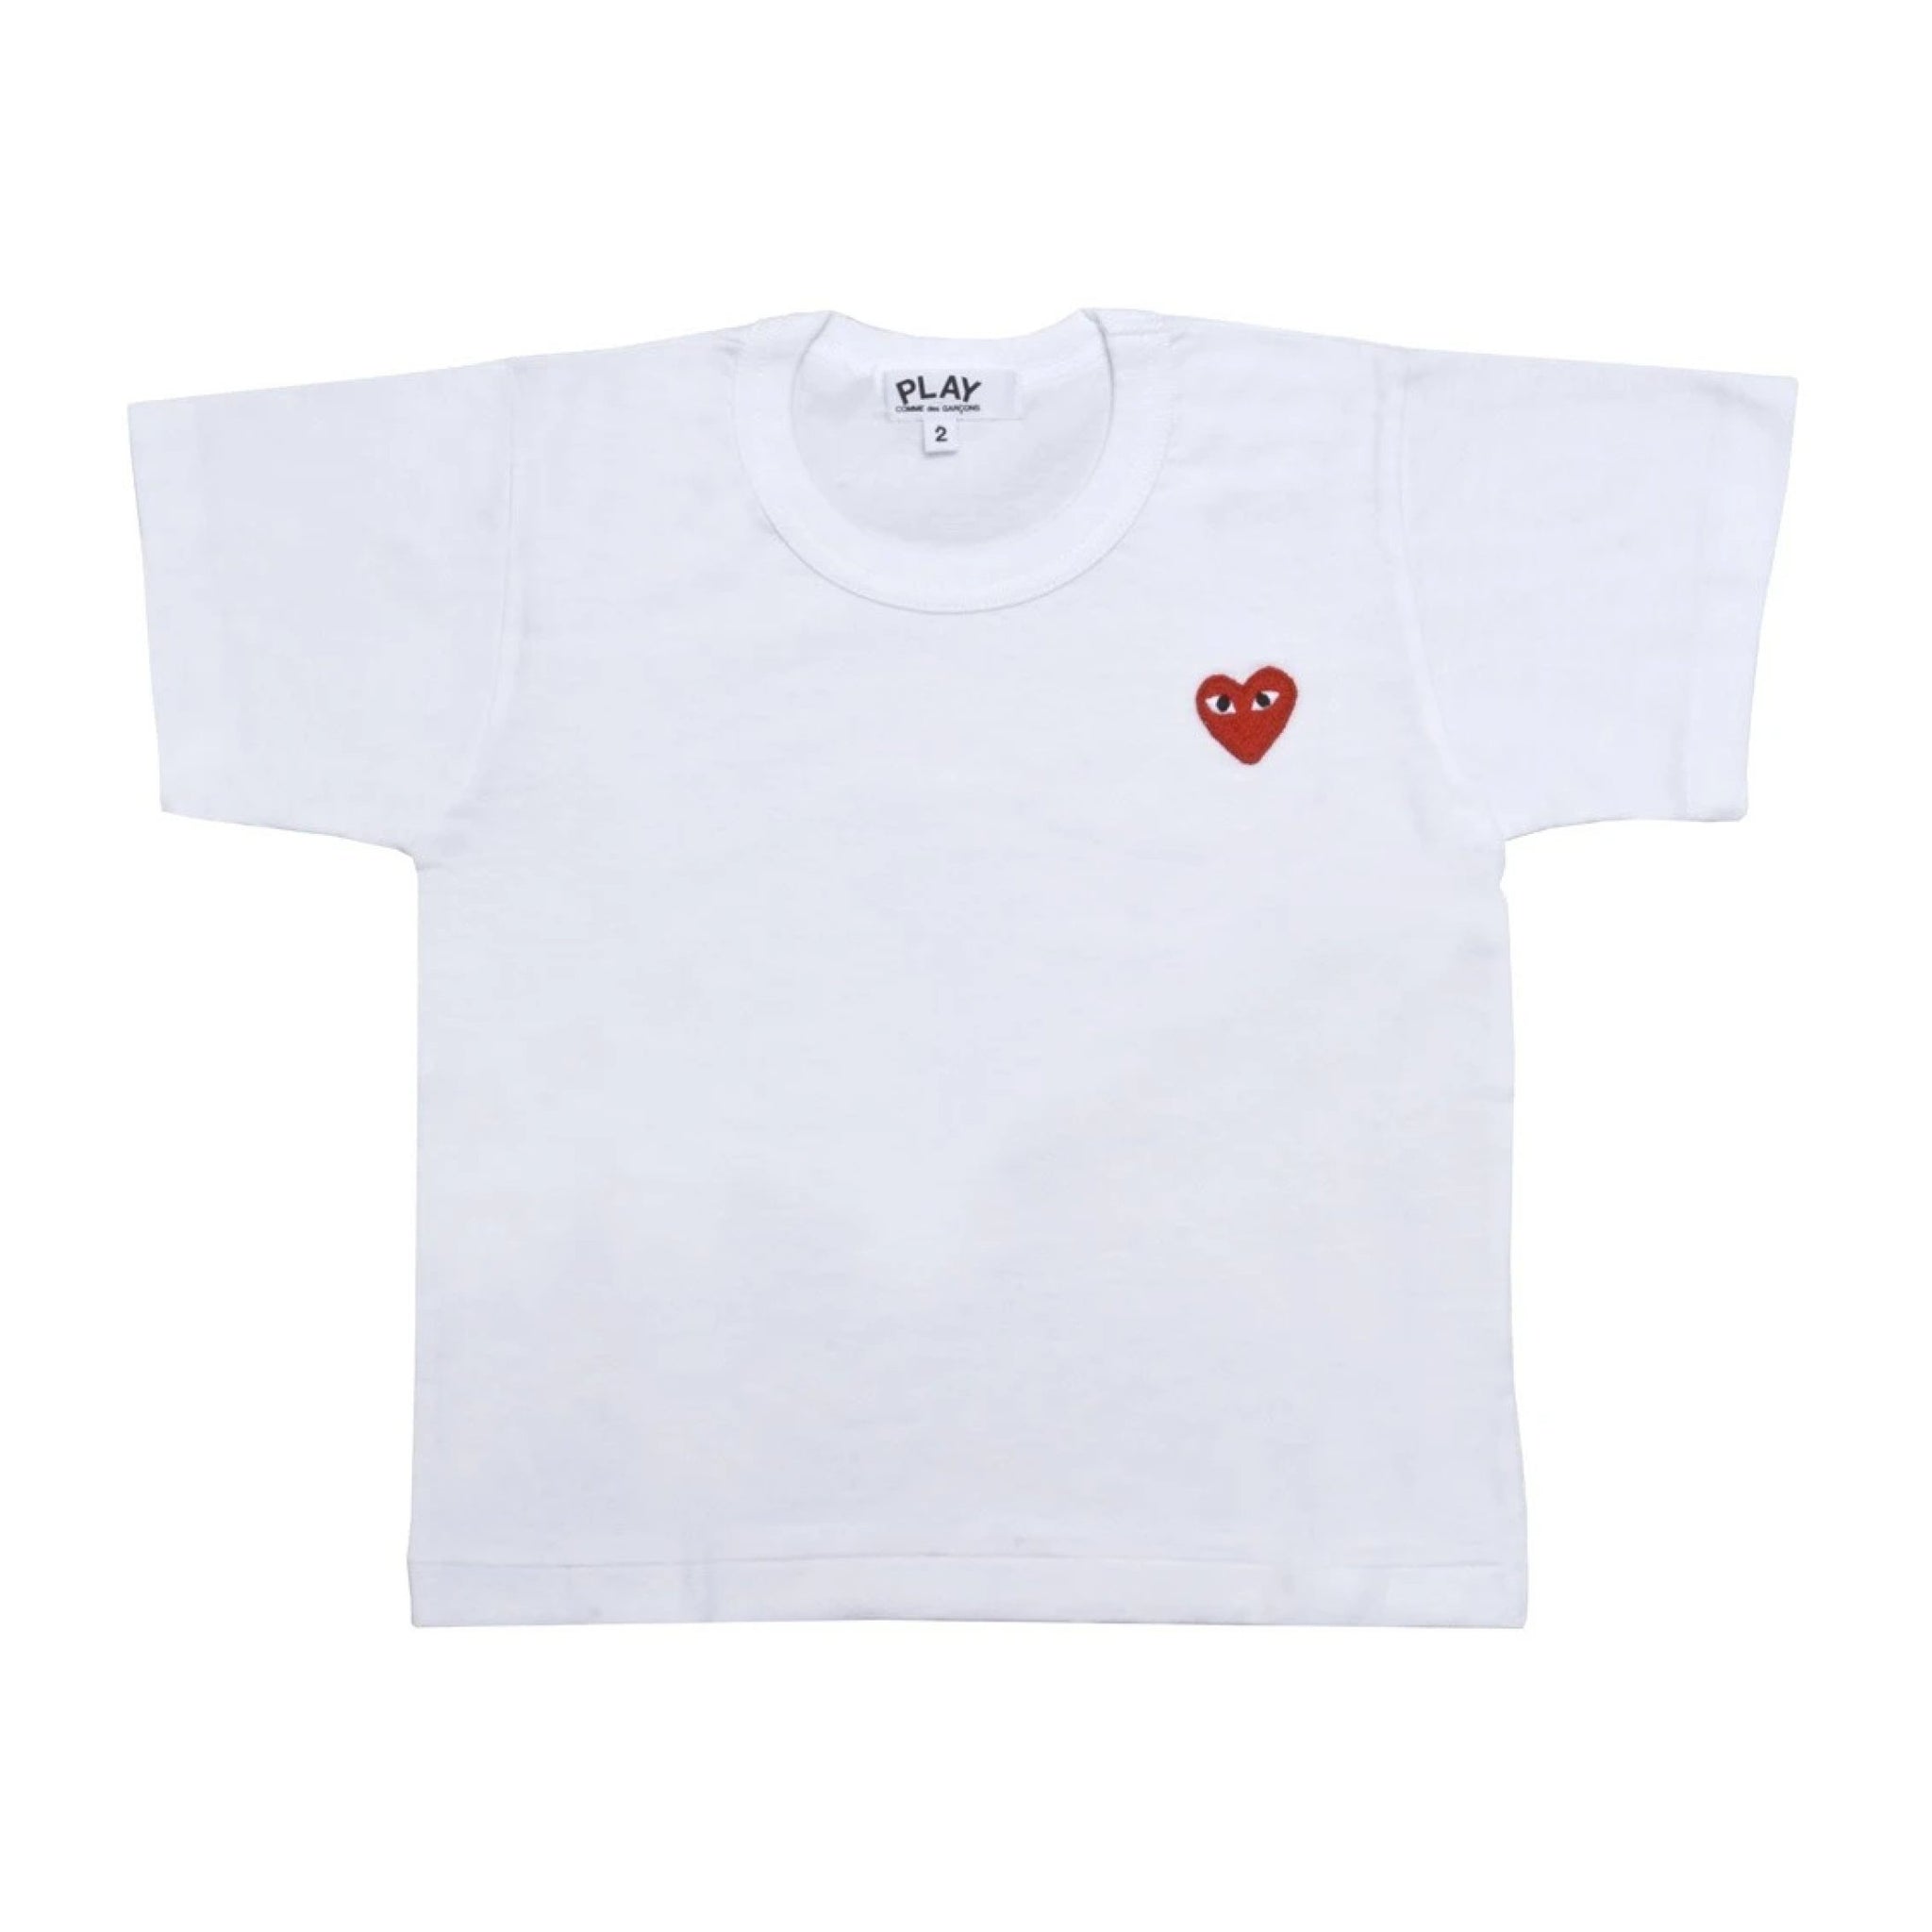 PLAY Kids T-shirt Red Emblem (White)